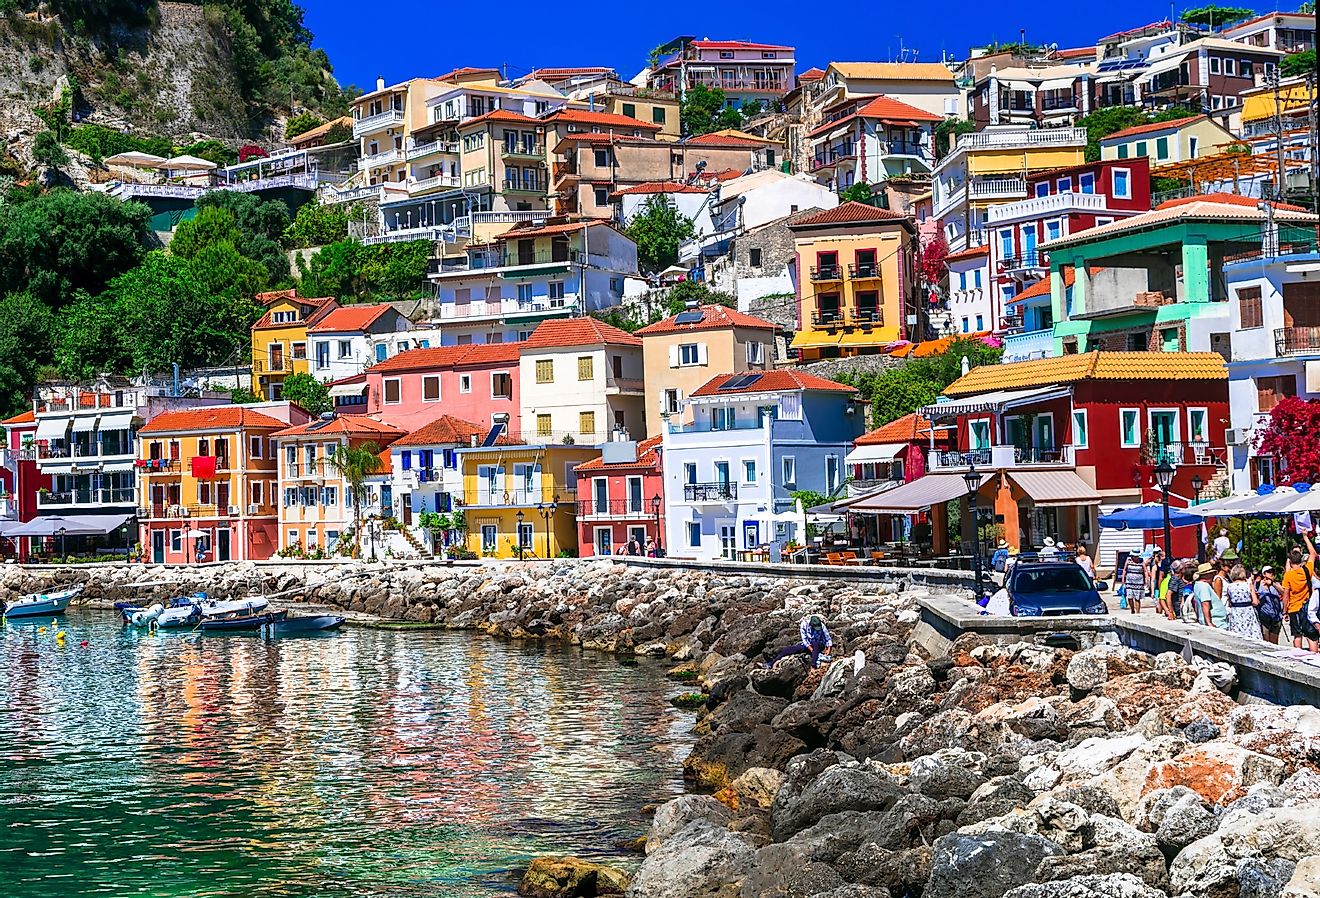 The beautiful, colorful coastal town of Parga, Greece.